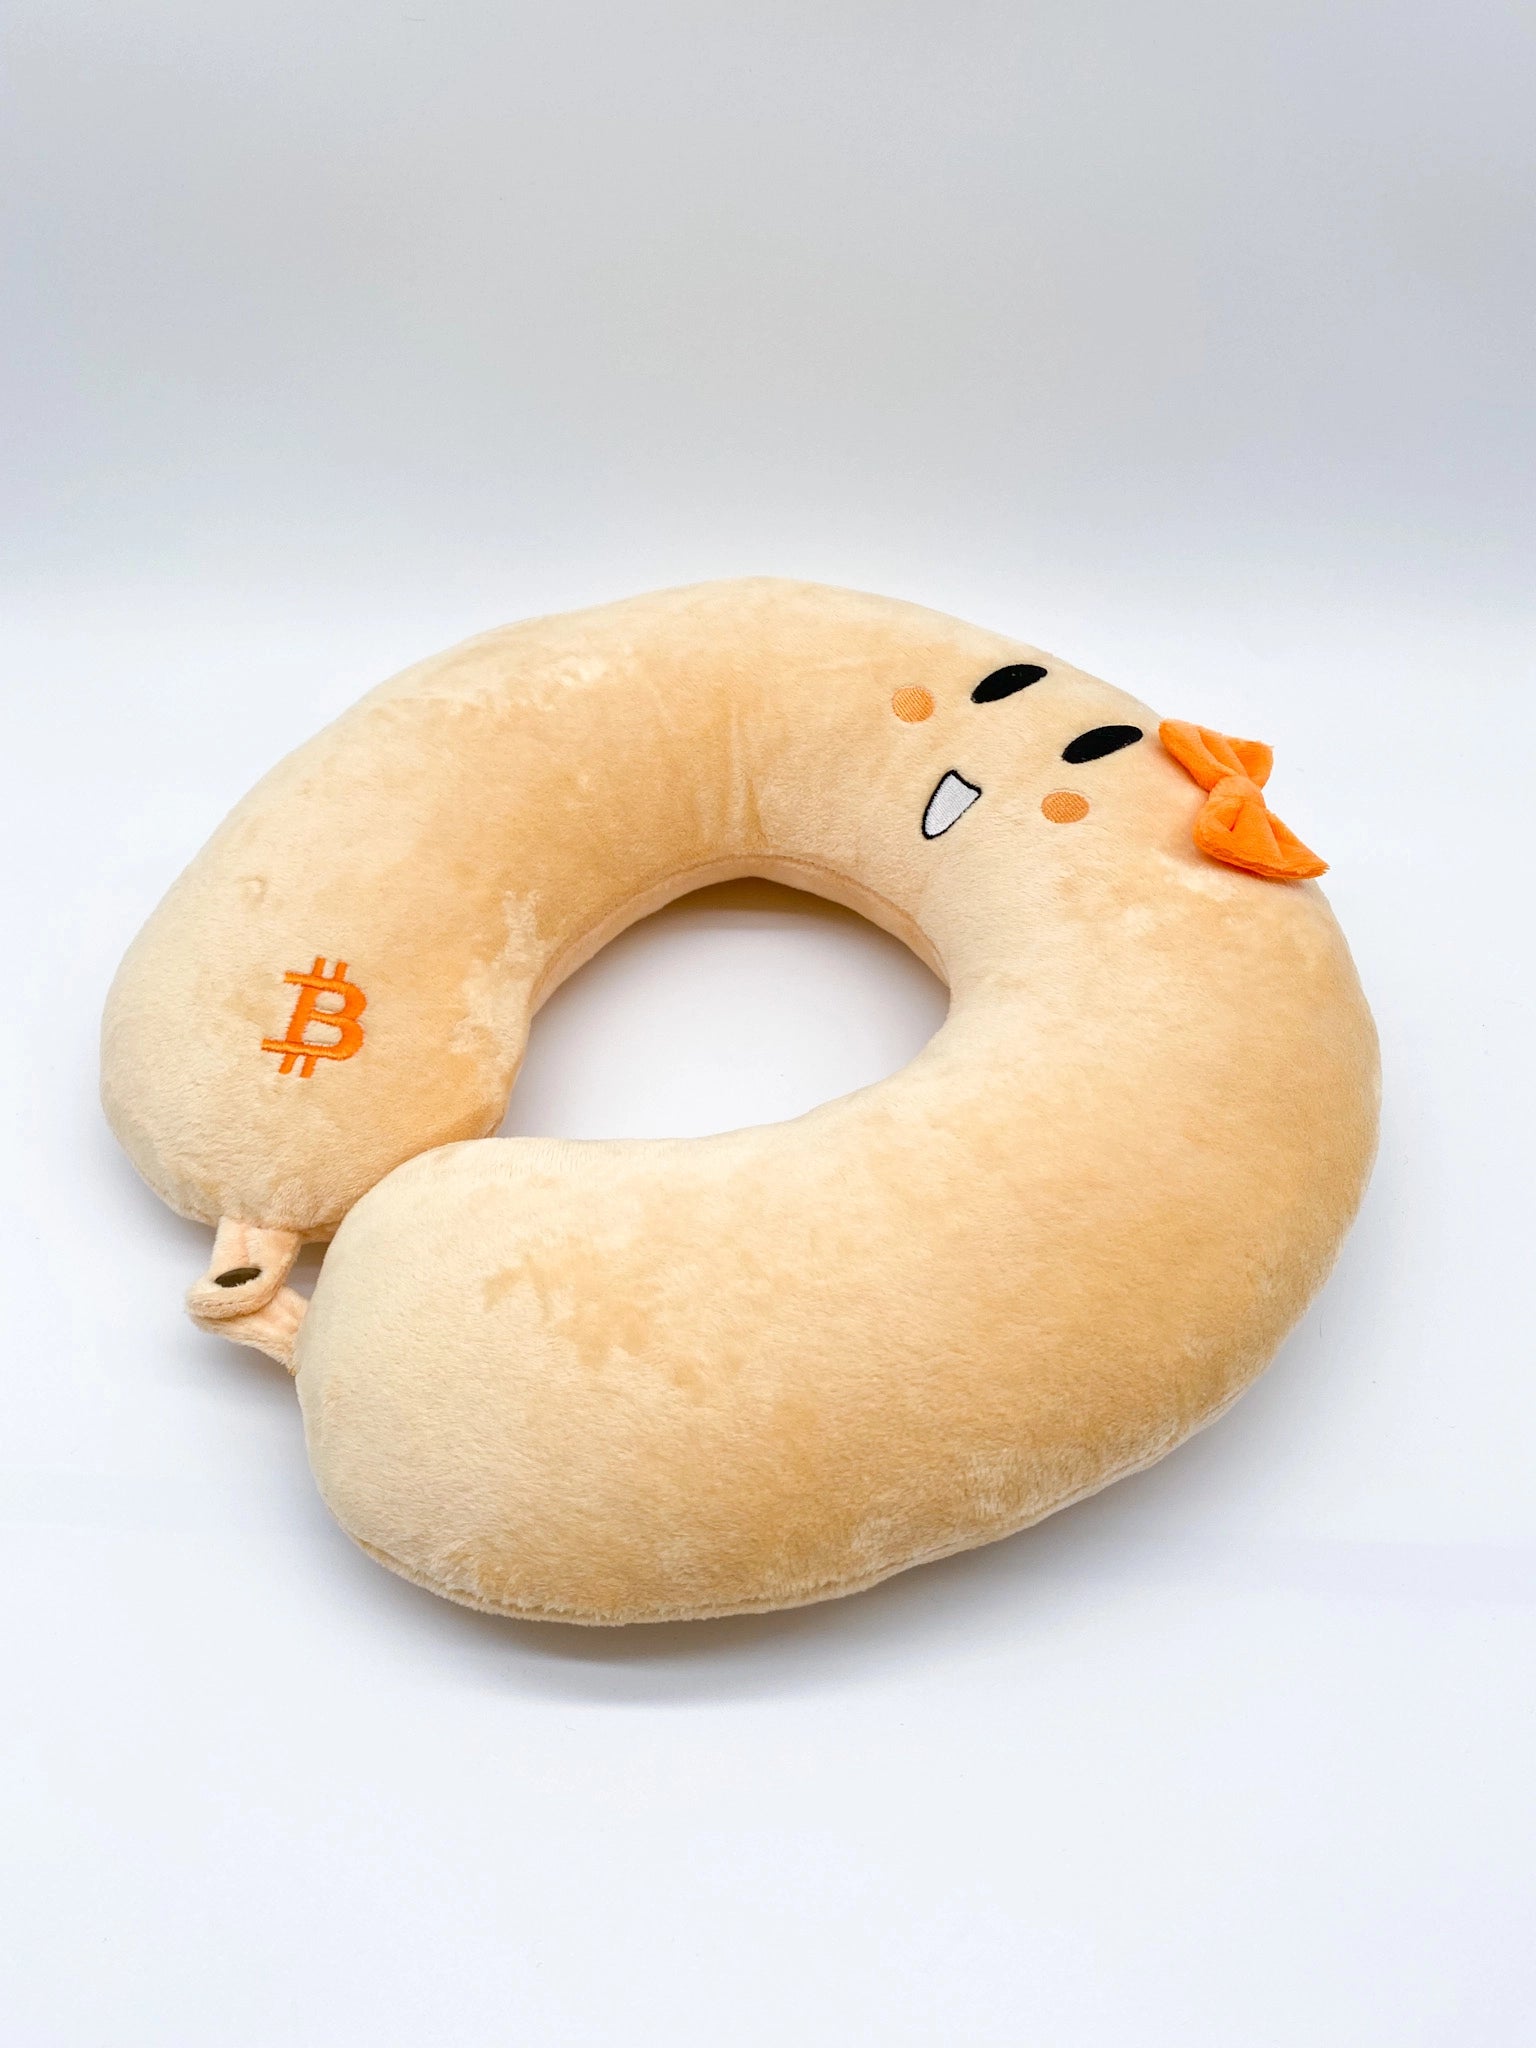 The Baby HODLer Travel Pillow - Bitcoin Magazine